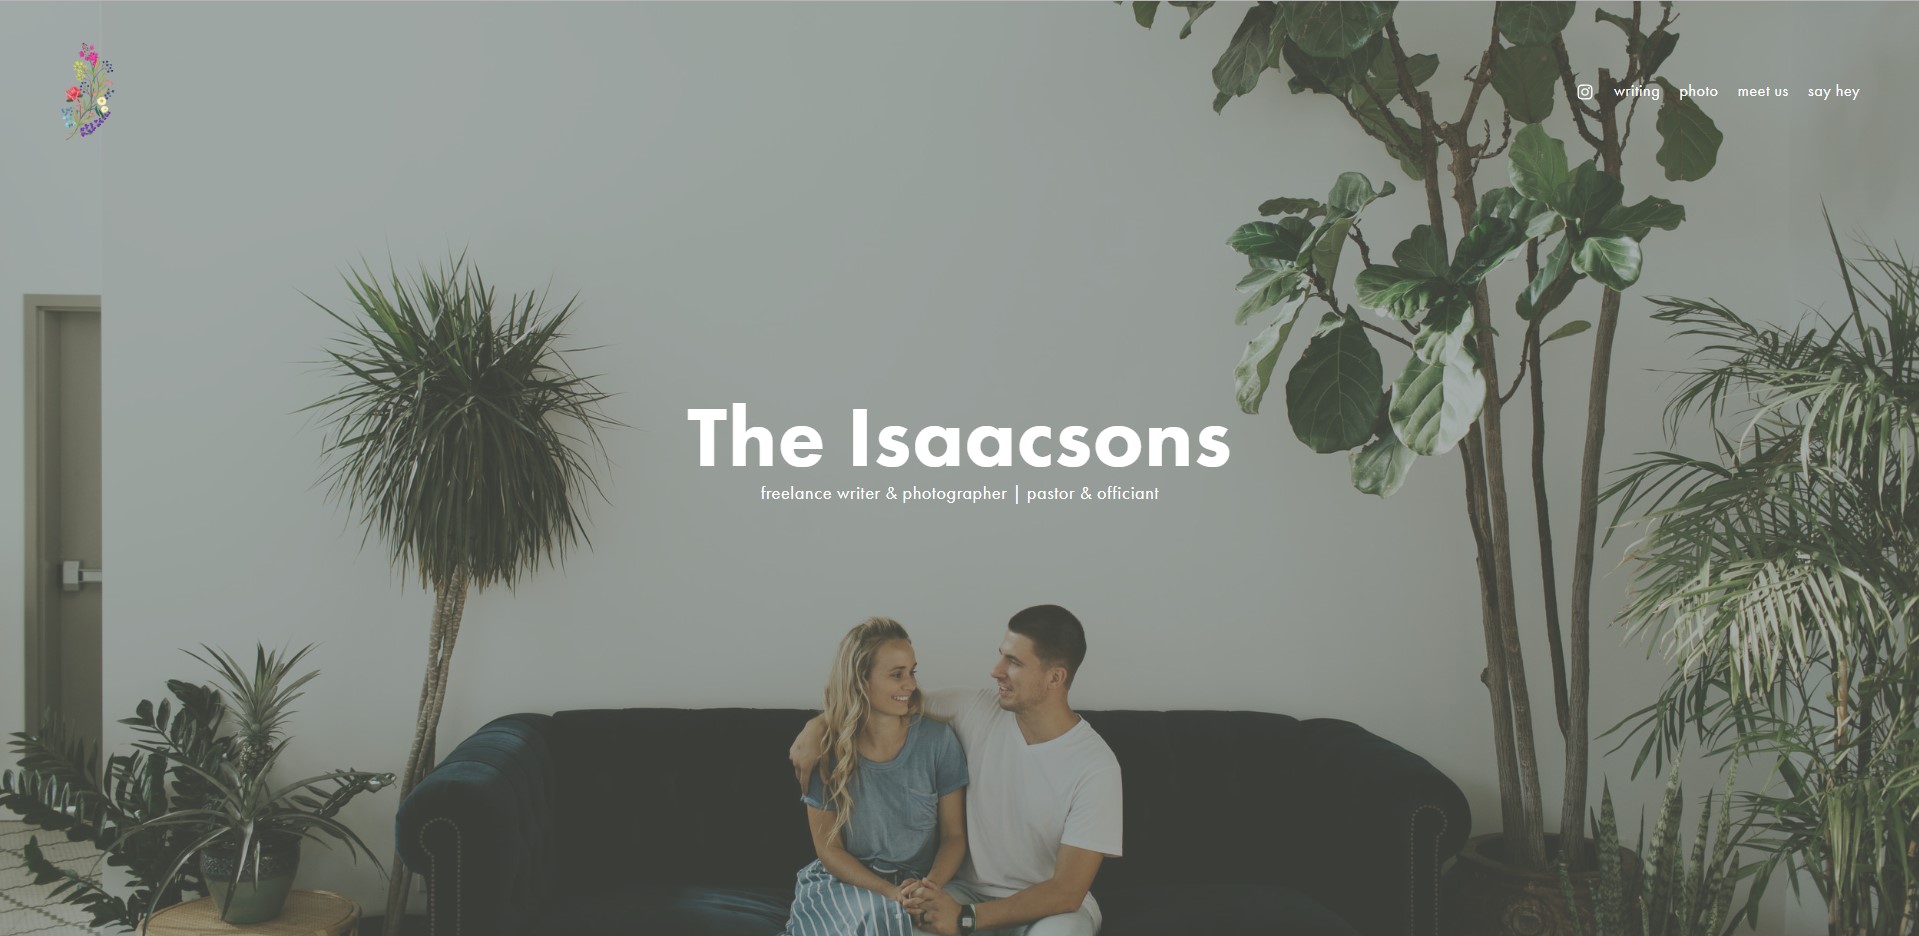 The Isaacsons Homepage.jpg